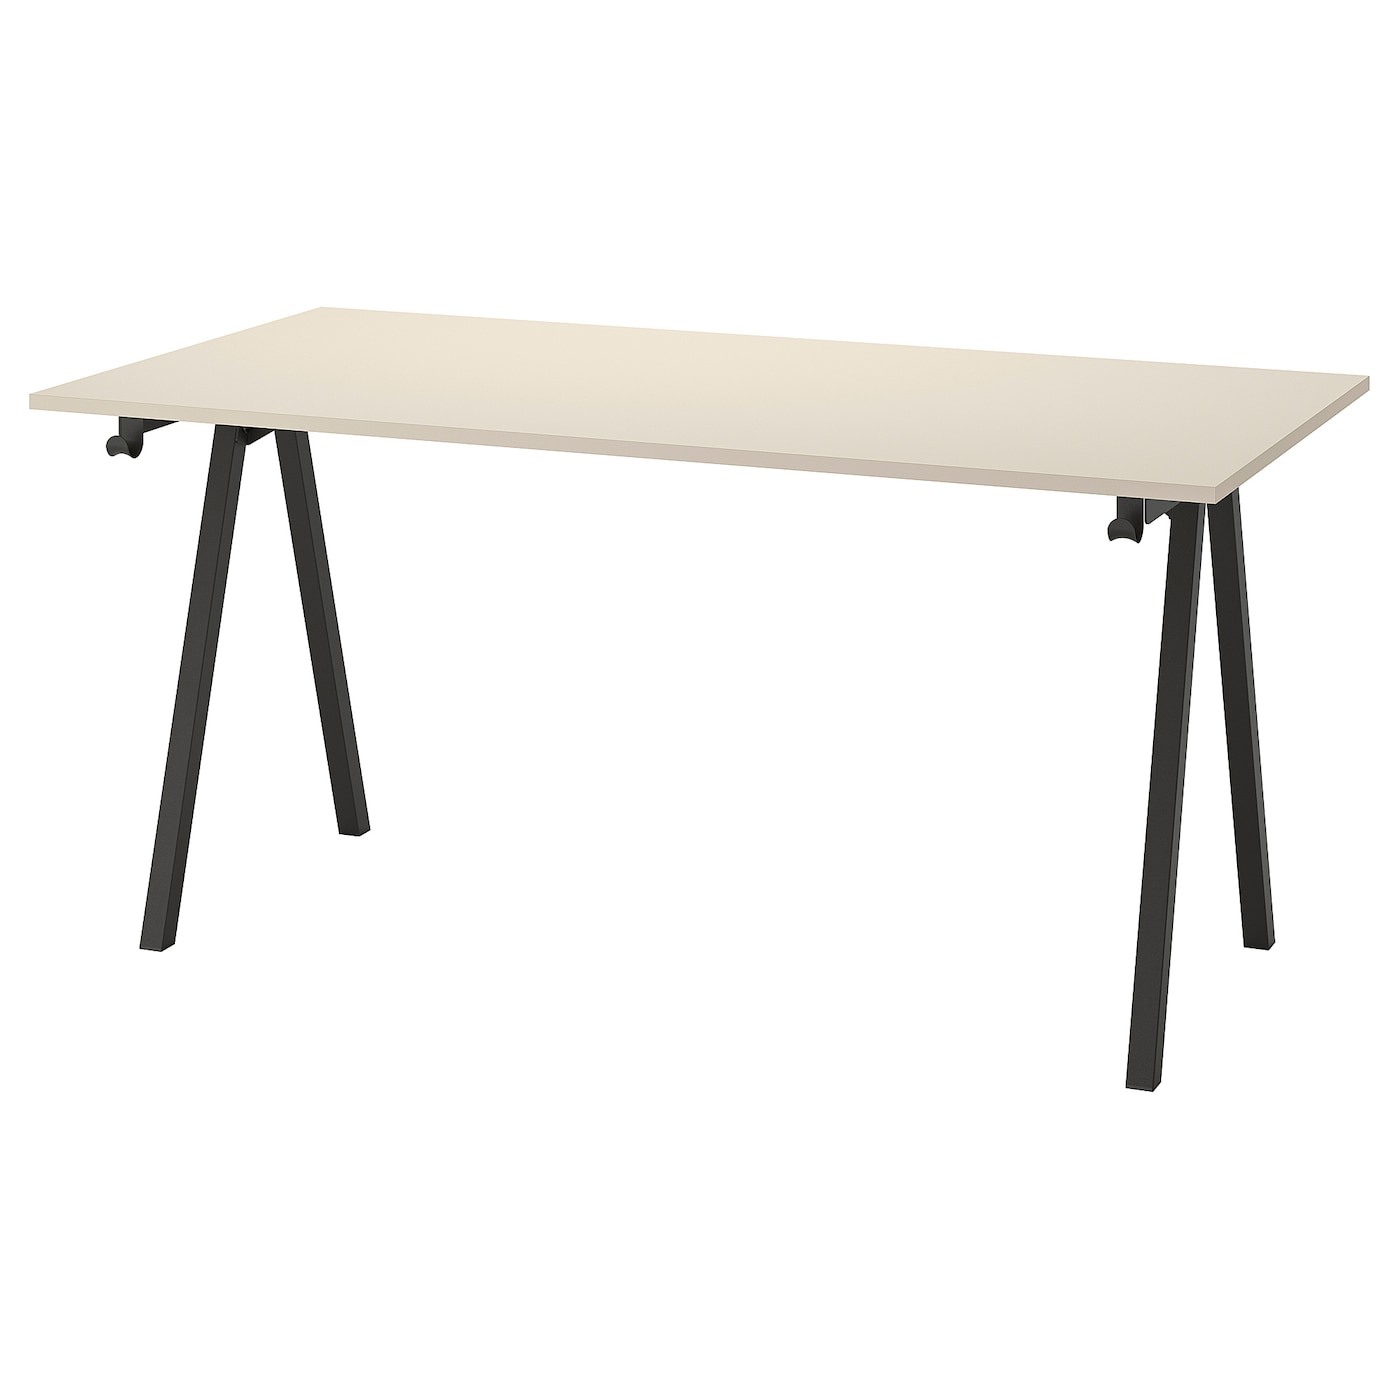 Письменный стол - IKEA TROTTEN, 160х80 см, бежевый/антрацит, ТРОТТЕН ИКЕА